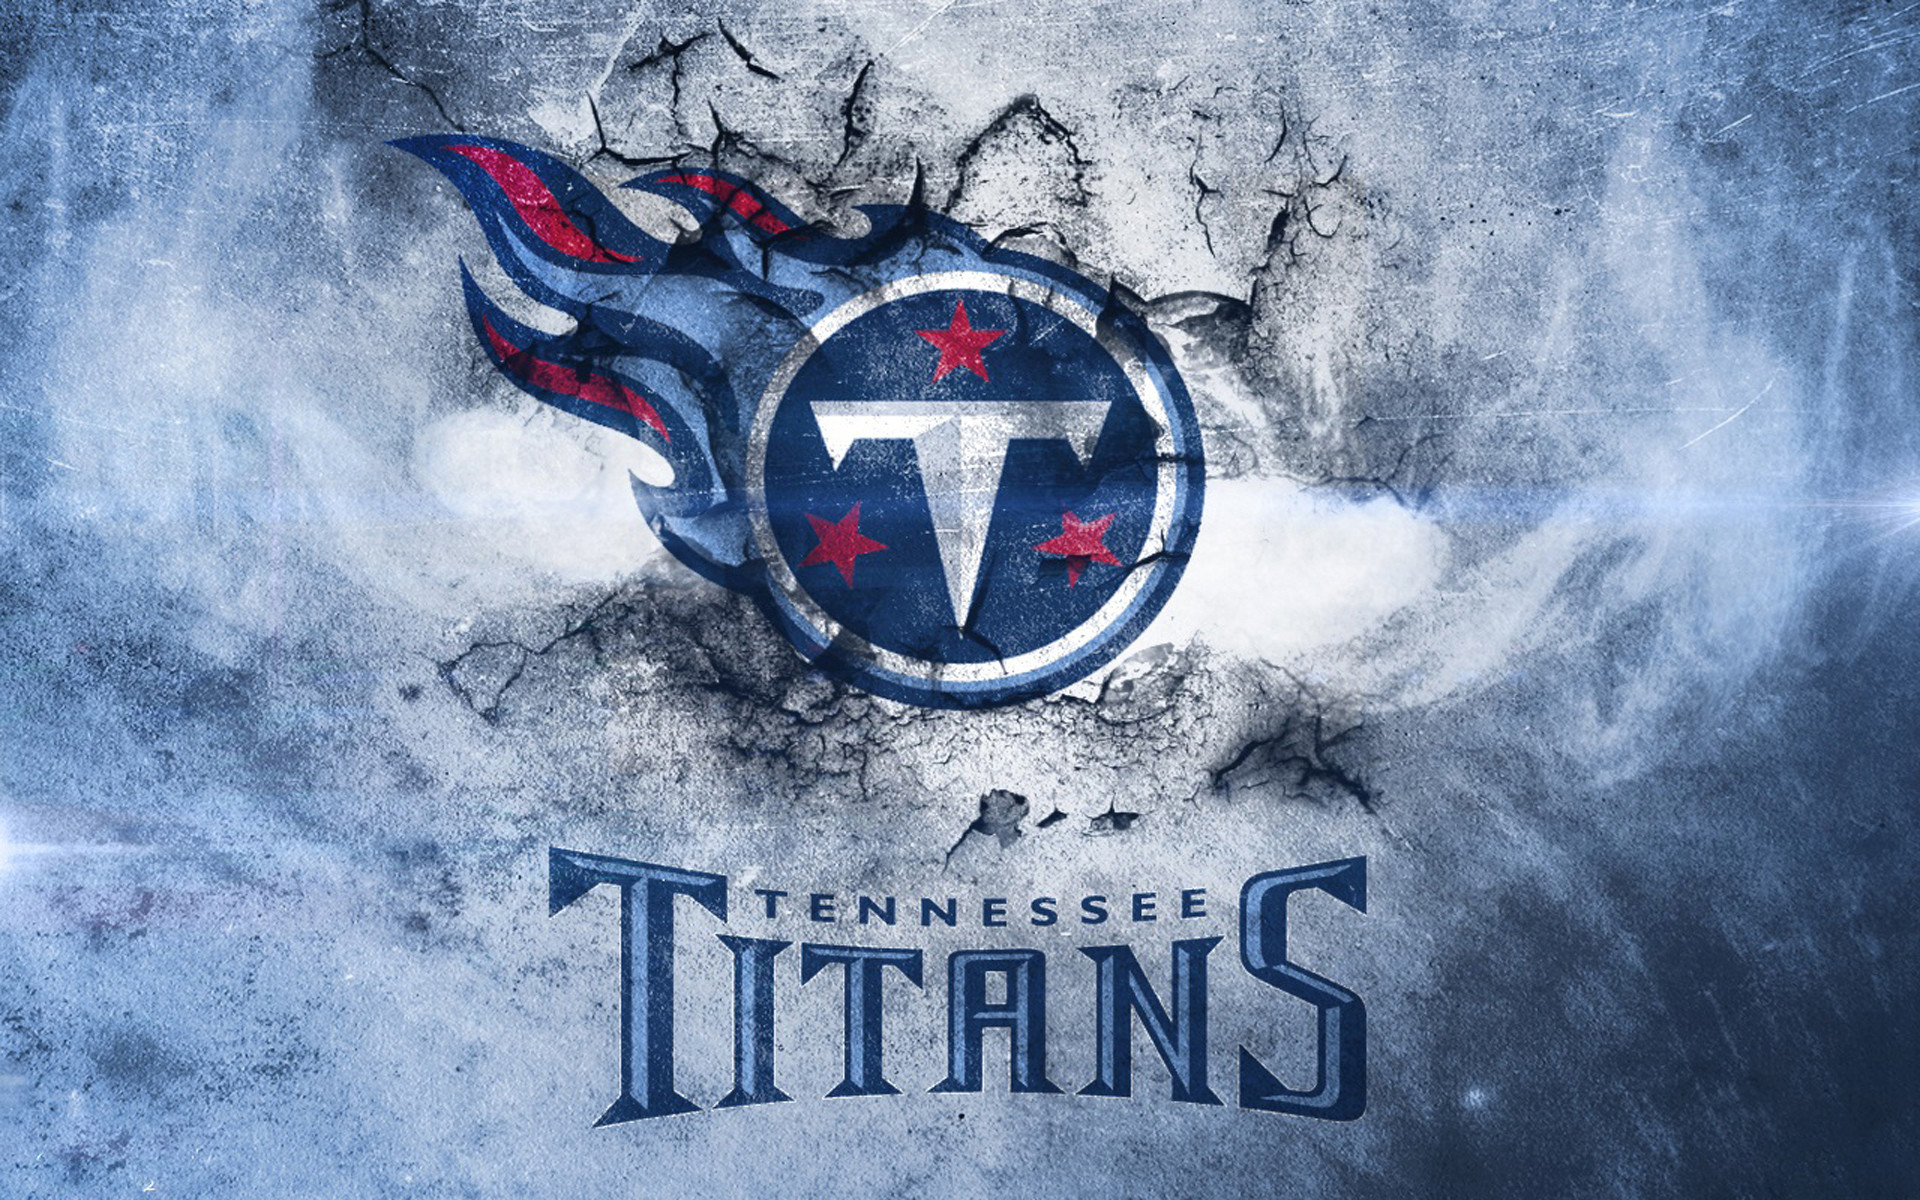 1920x1200 Download Fullsize Image Â· Tennessee Titans logo wallpaper ...